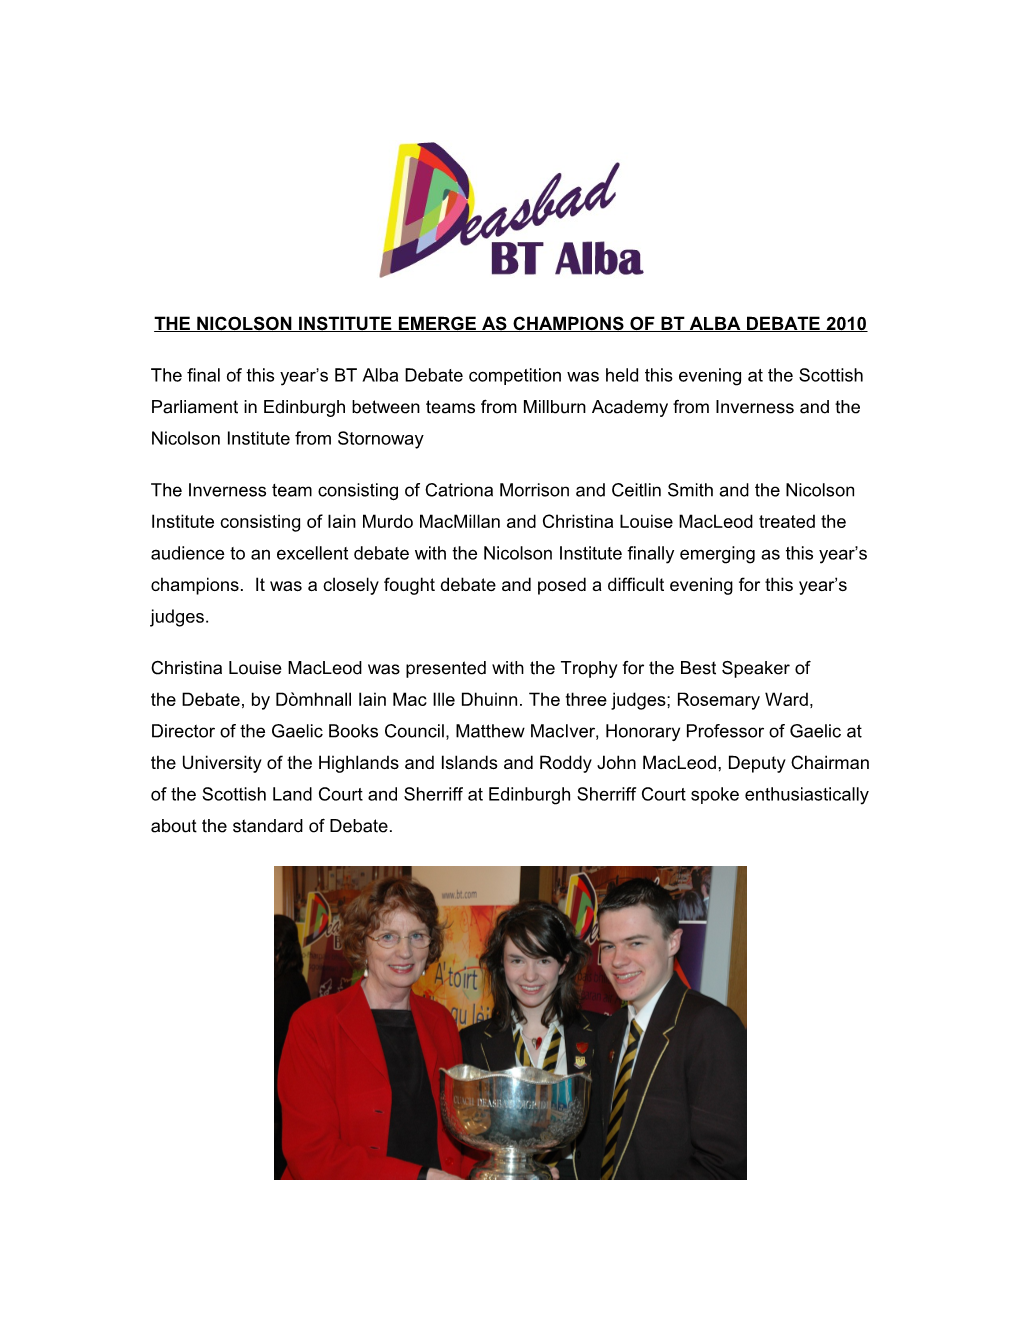 The Nicolson Institute Emerge As Champions of Bt Alba Debate 2010